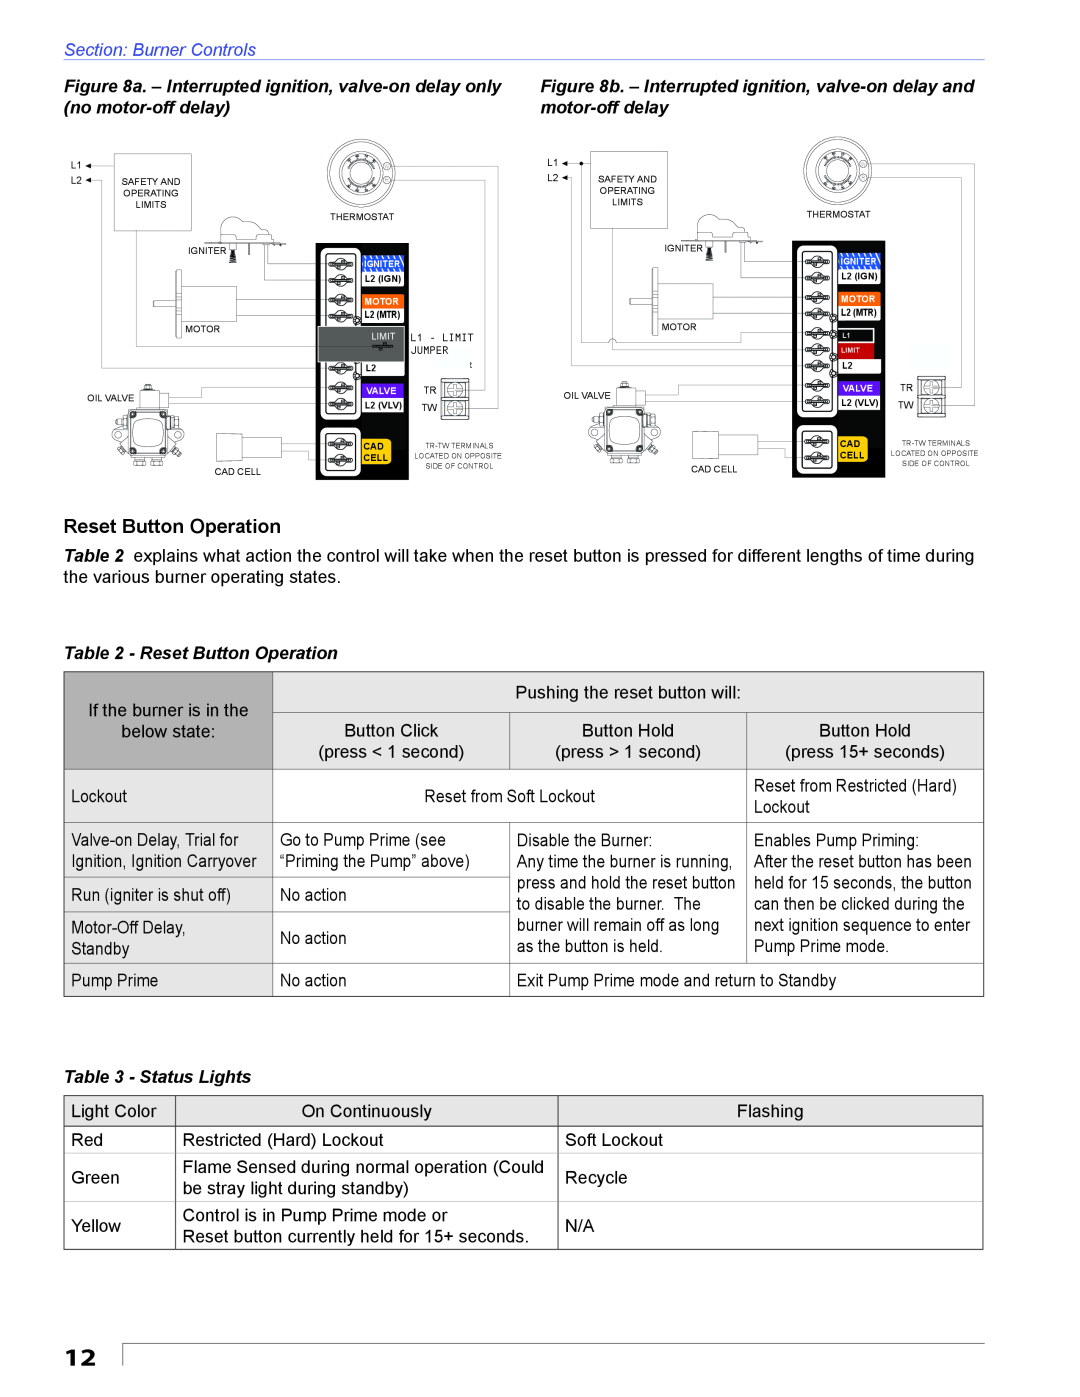 Beckett AFII manual Reset Button Operation, Section Burner Controls, Status Lights 